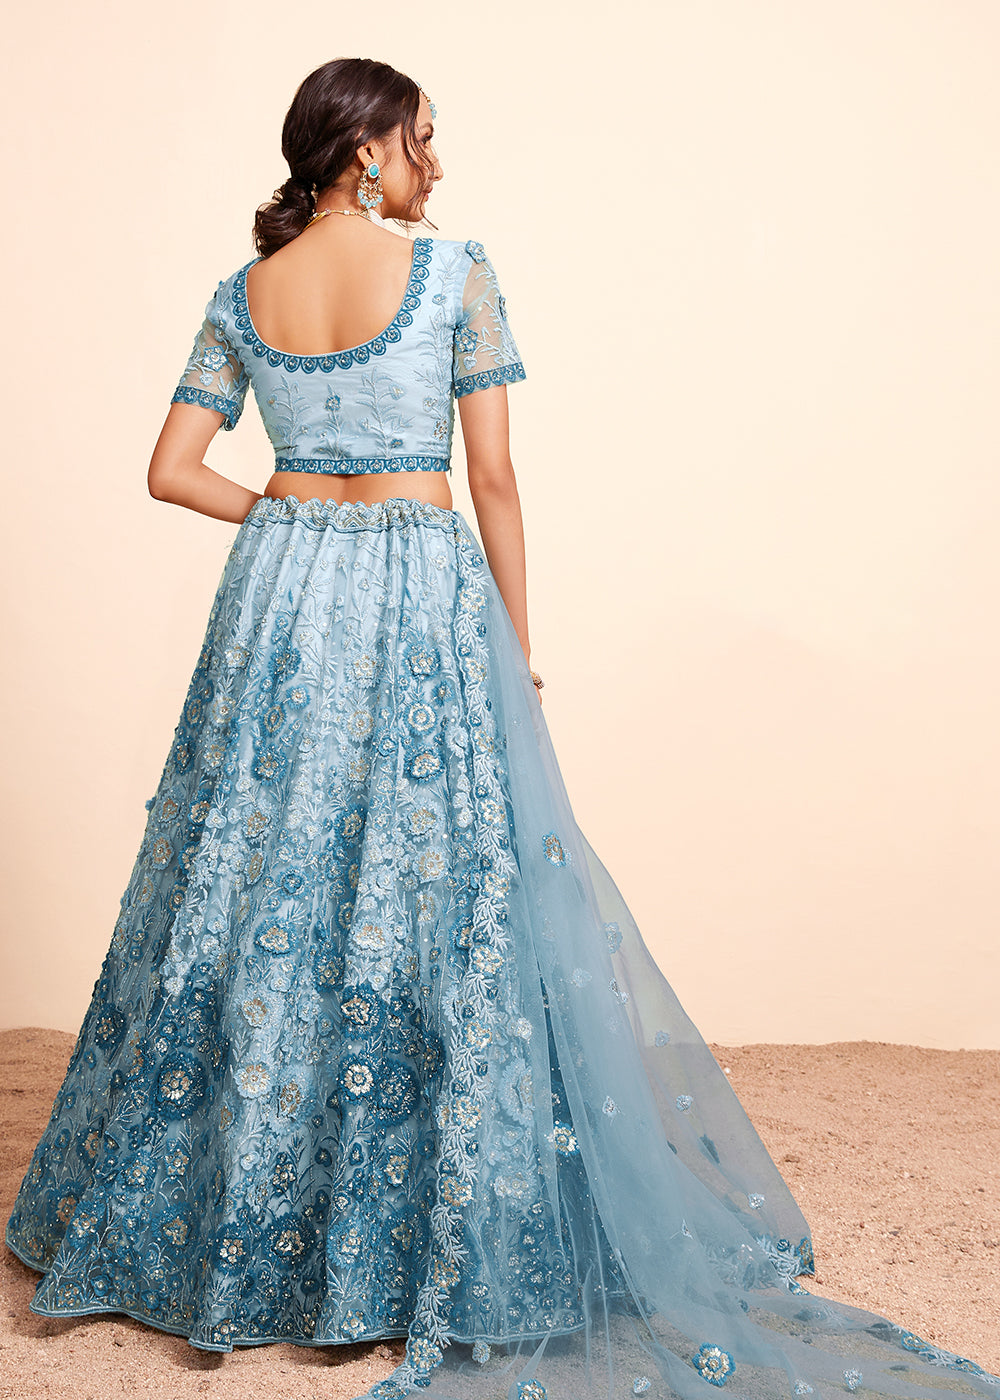 Buy Now Firozi Blue Beautifully Heavy Embroidered Bridal Lehenga Choli Online in USA, UK, Canada & Worldwide at Empress Clothing.